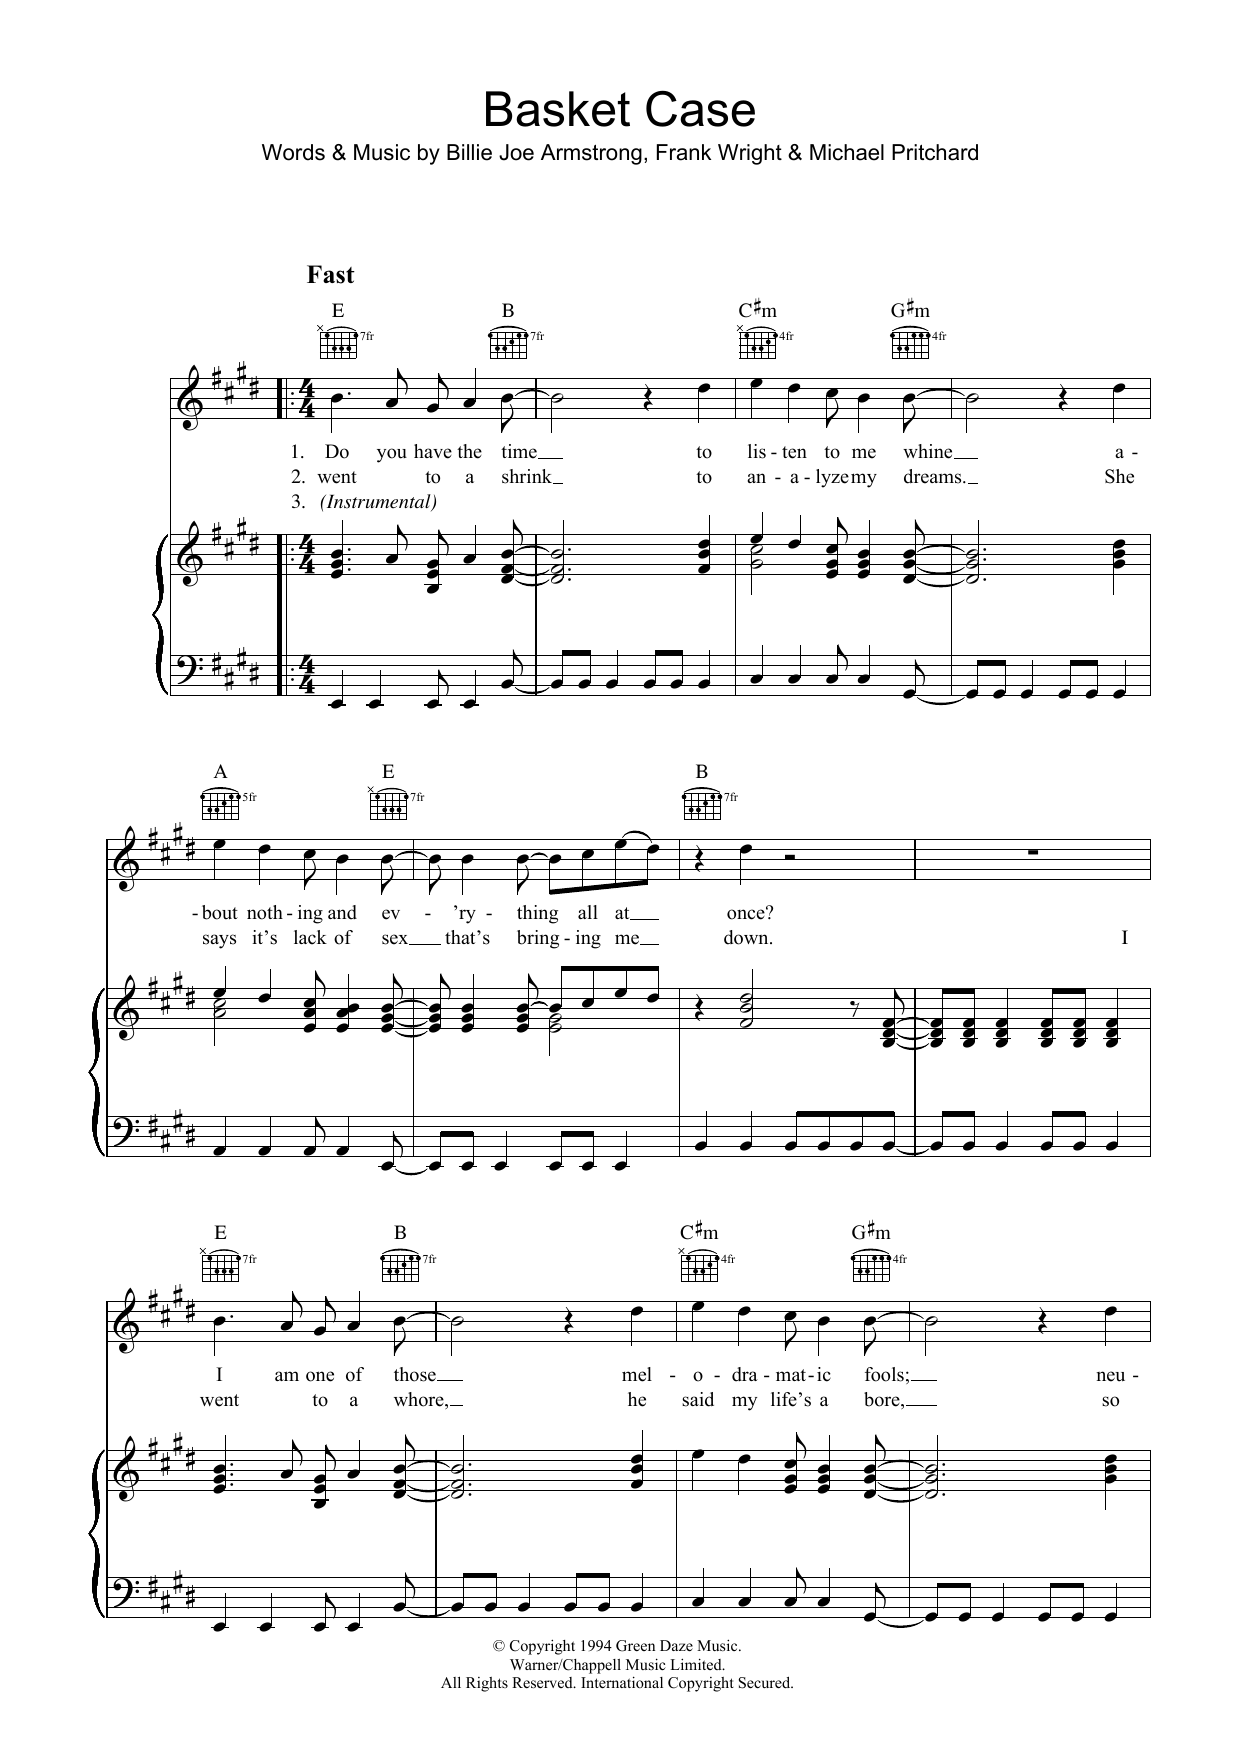 methaan Ijsbeer spier Green Day "Basket Case" Sheet Music PDF Notes, Chords | Rock Score Ukulele  Download Printable. SKU: 96580